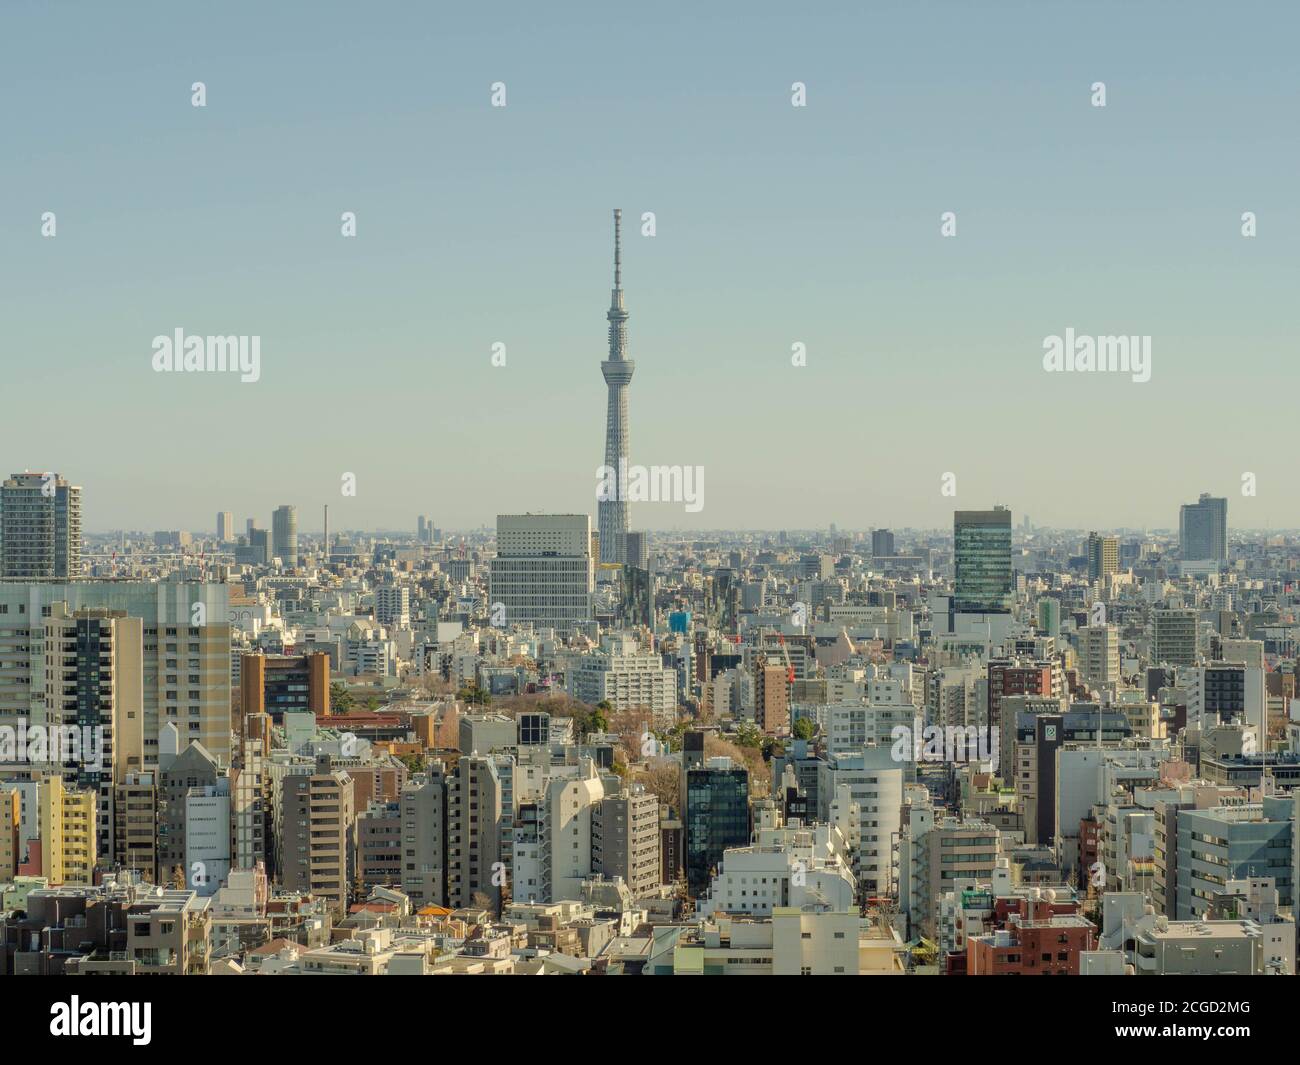 Tokyo skyline. Tokyo Skytree from Bunkyo center, aerial city view Stock Photo